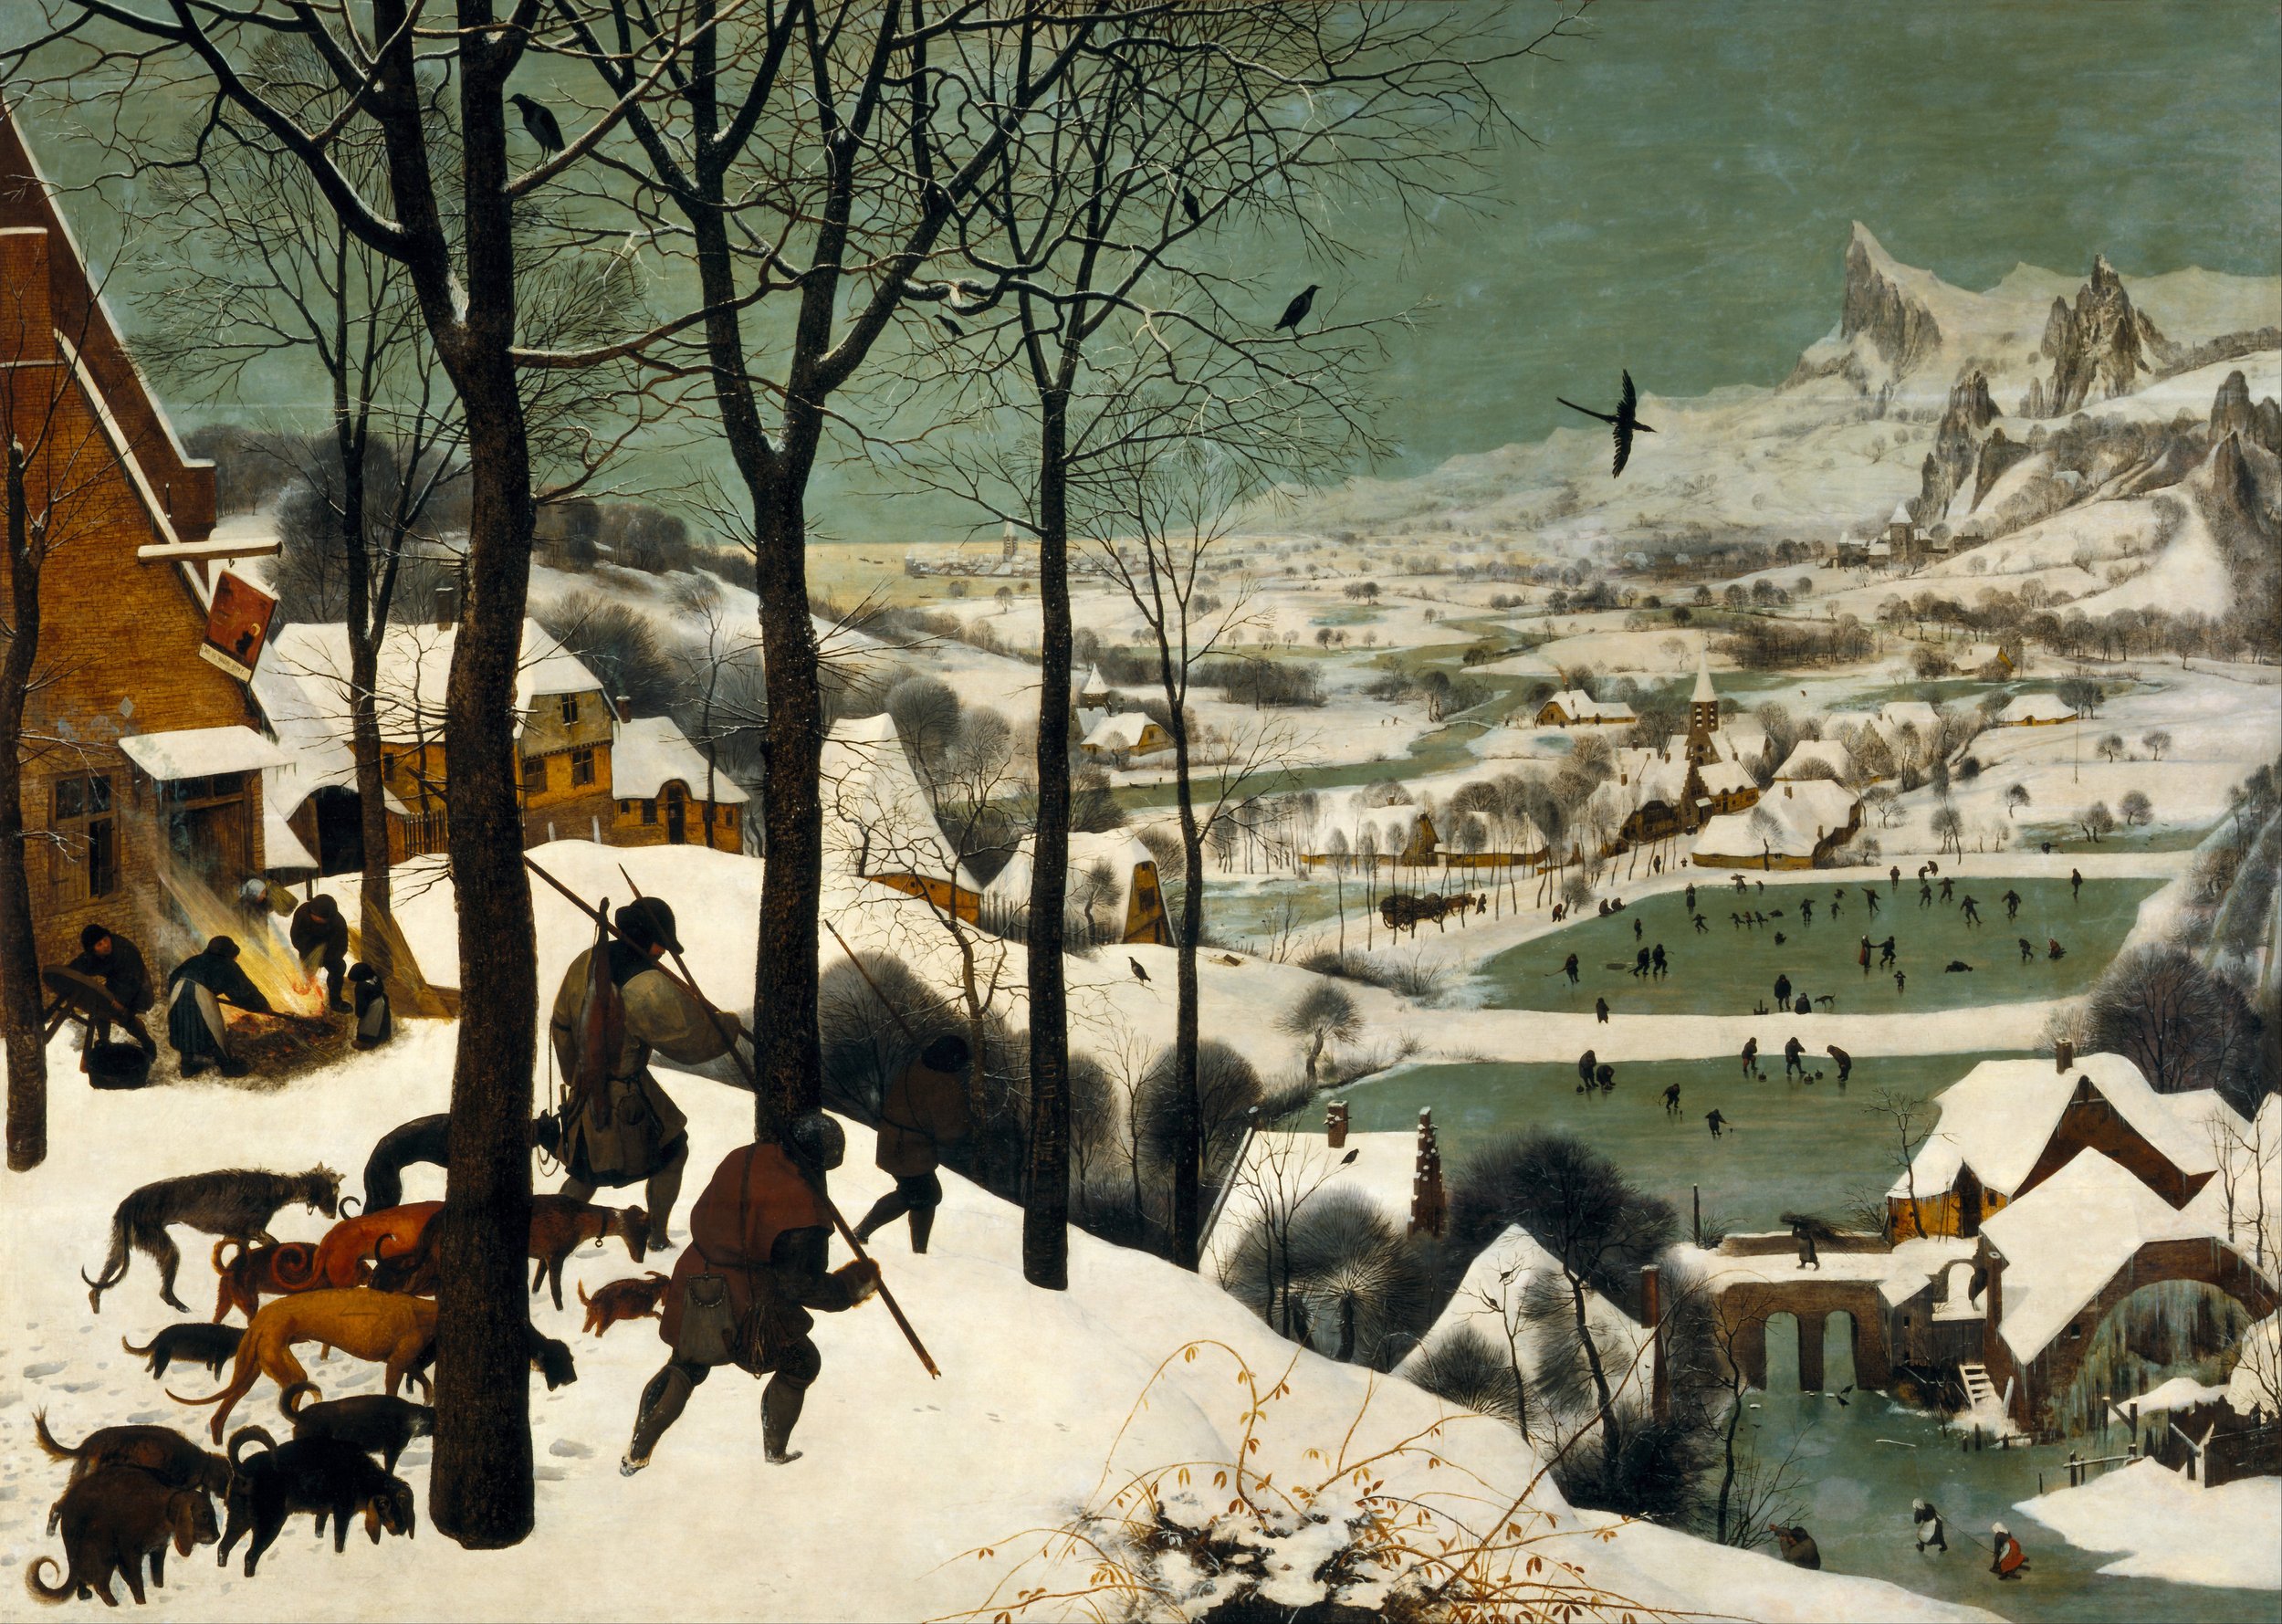 Pieter_Bruegel_the_Elder_-_Hunters_in_the_Snow_(Winter)_-_Google_Art_Project.jpg